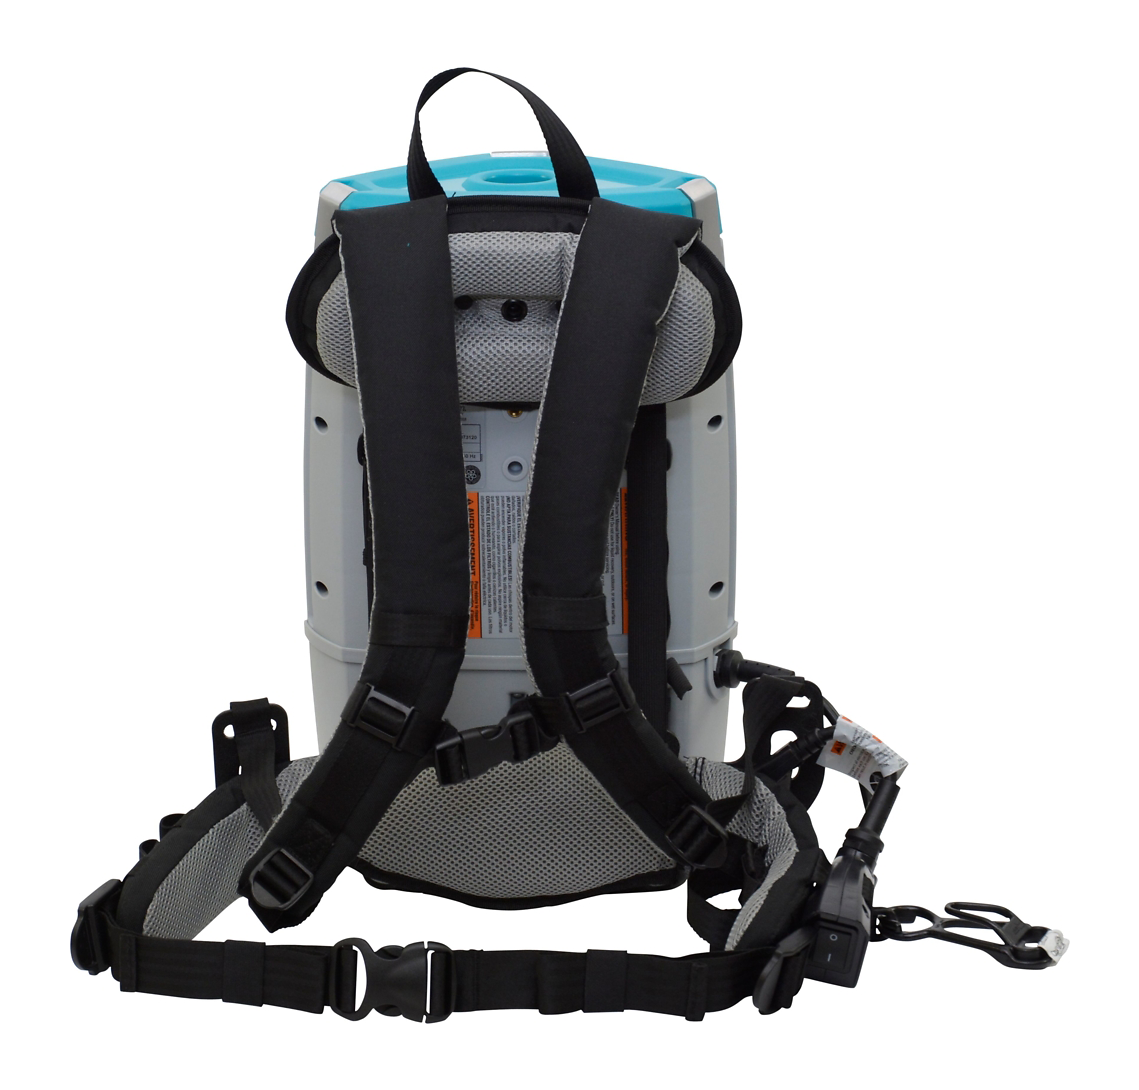 Portavac backpack type vacuum cleaner